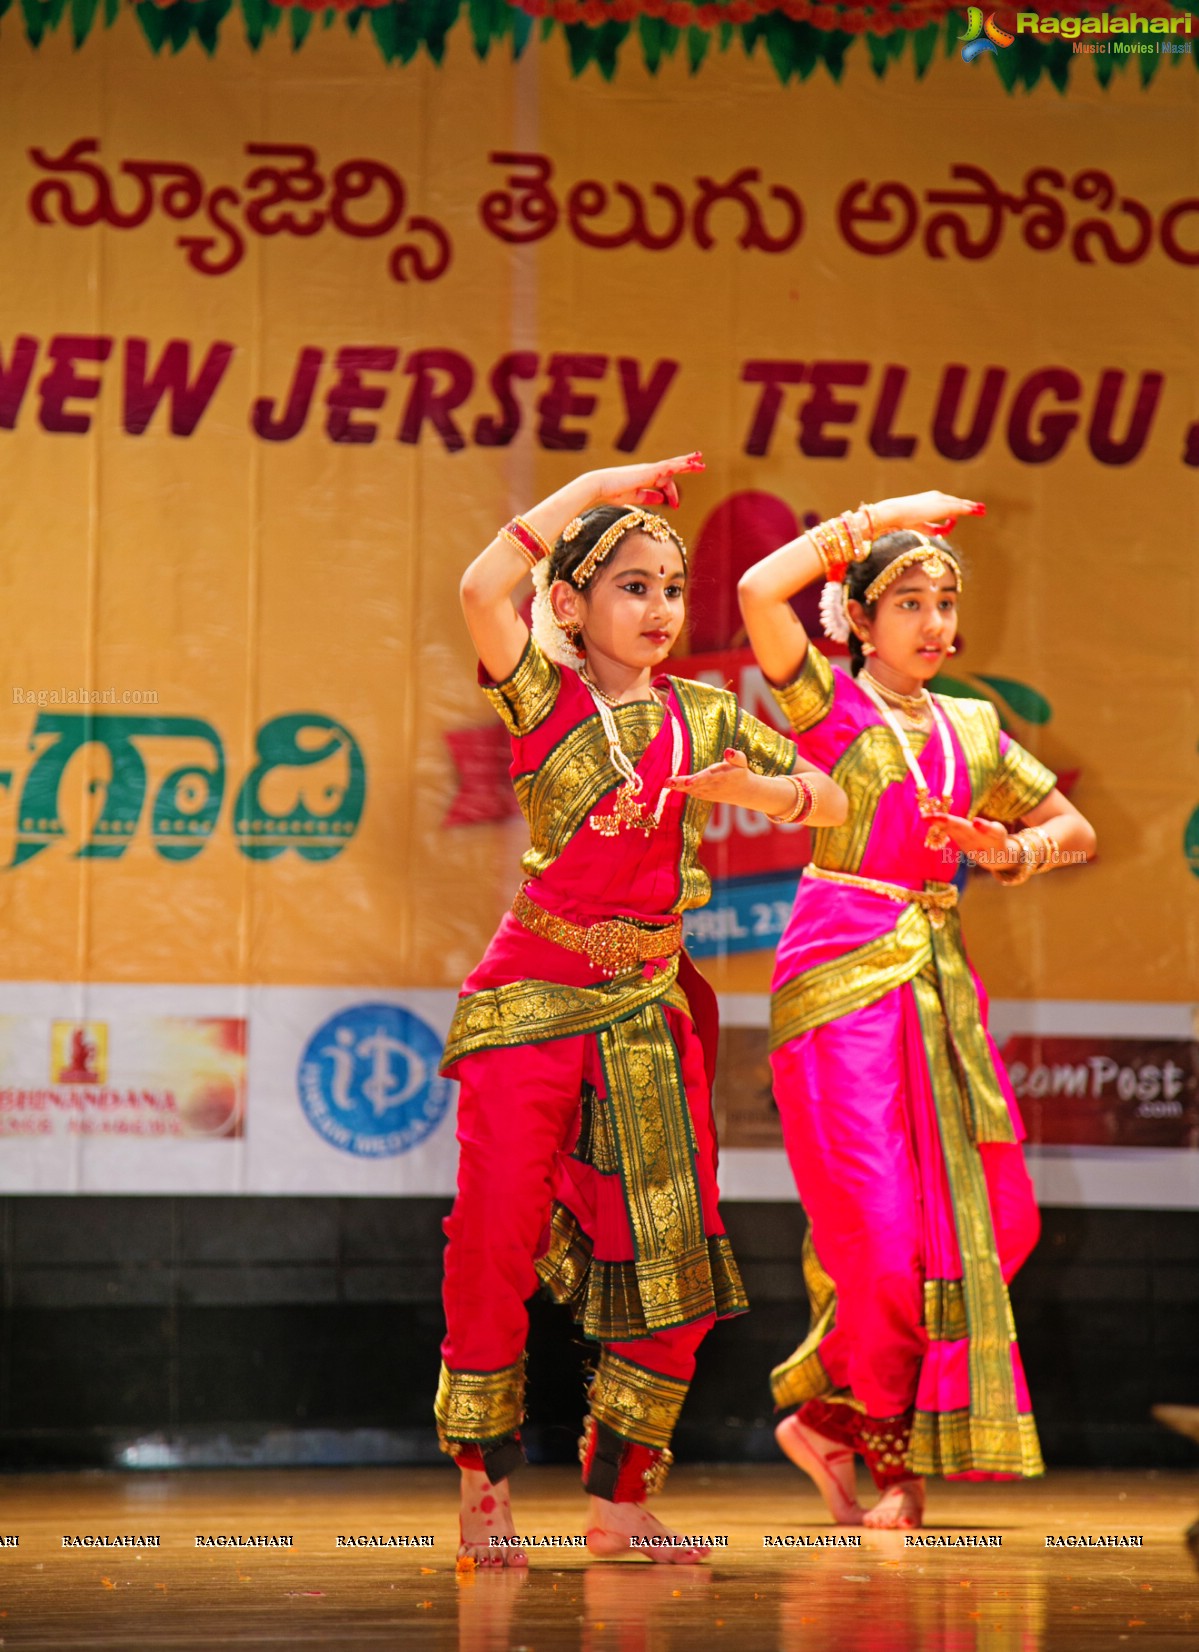 New Jersey Telugu Association (NJTA) Launch with DSP, Dil Raju and Nikhil